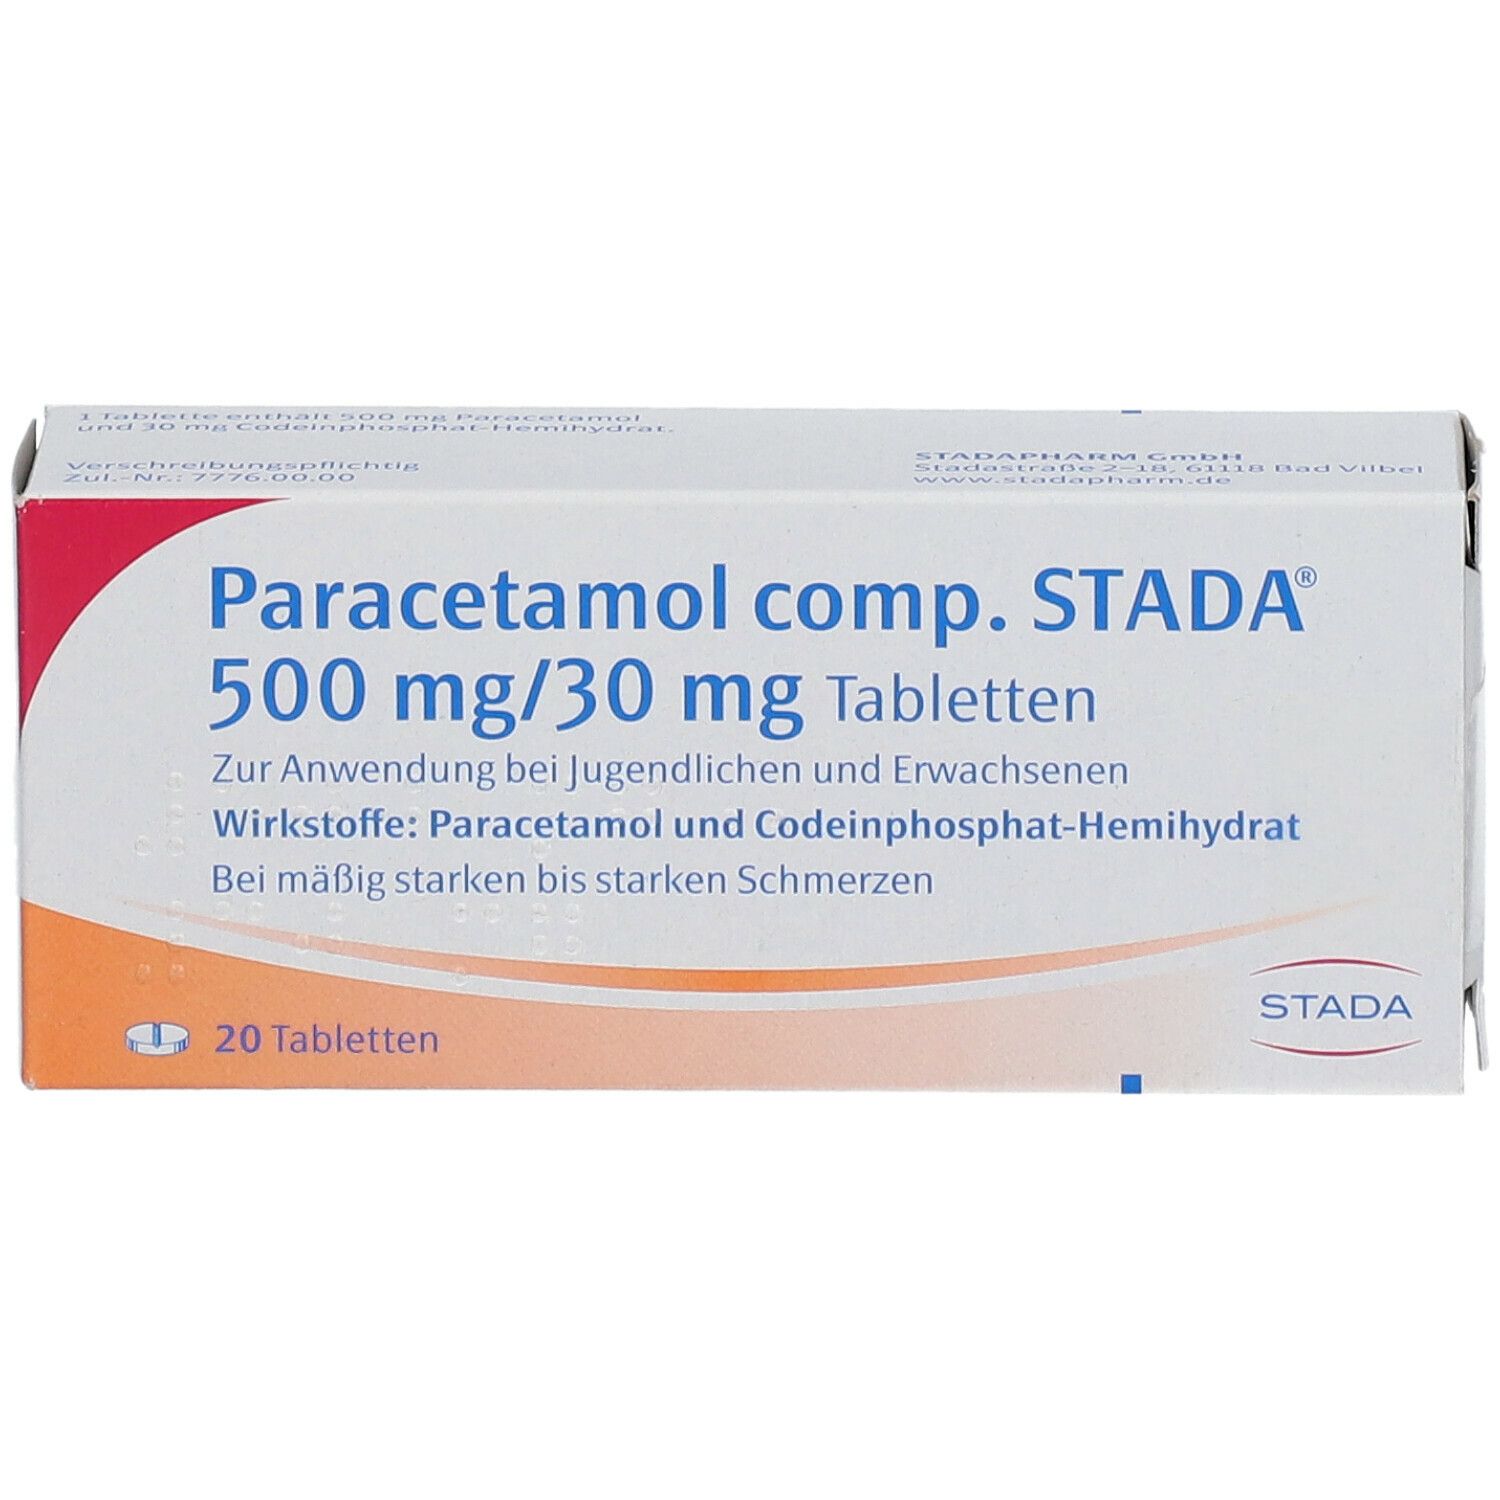 Paracetamol comp. STADA® 500 mg/30 mg